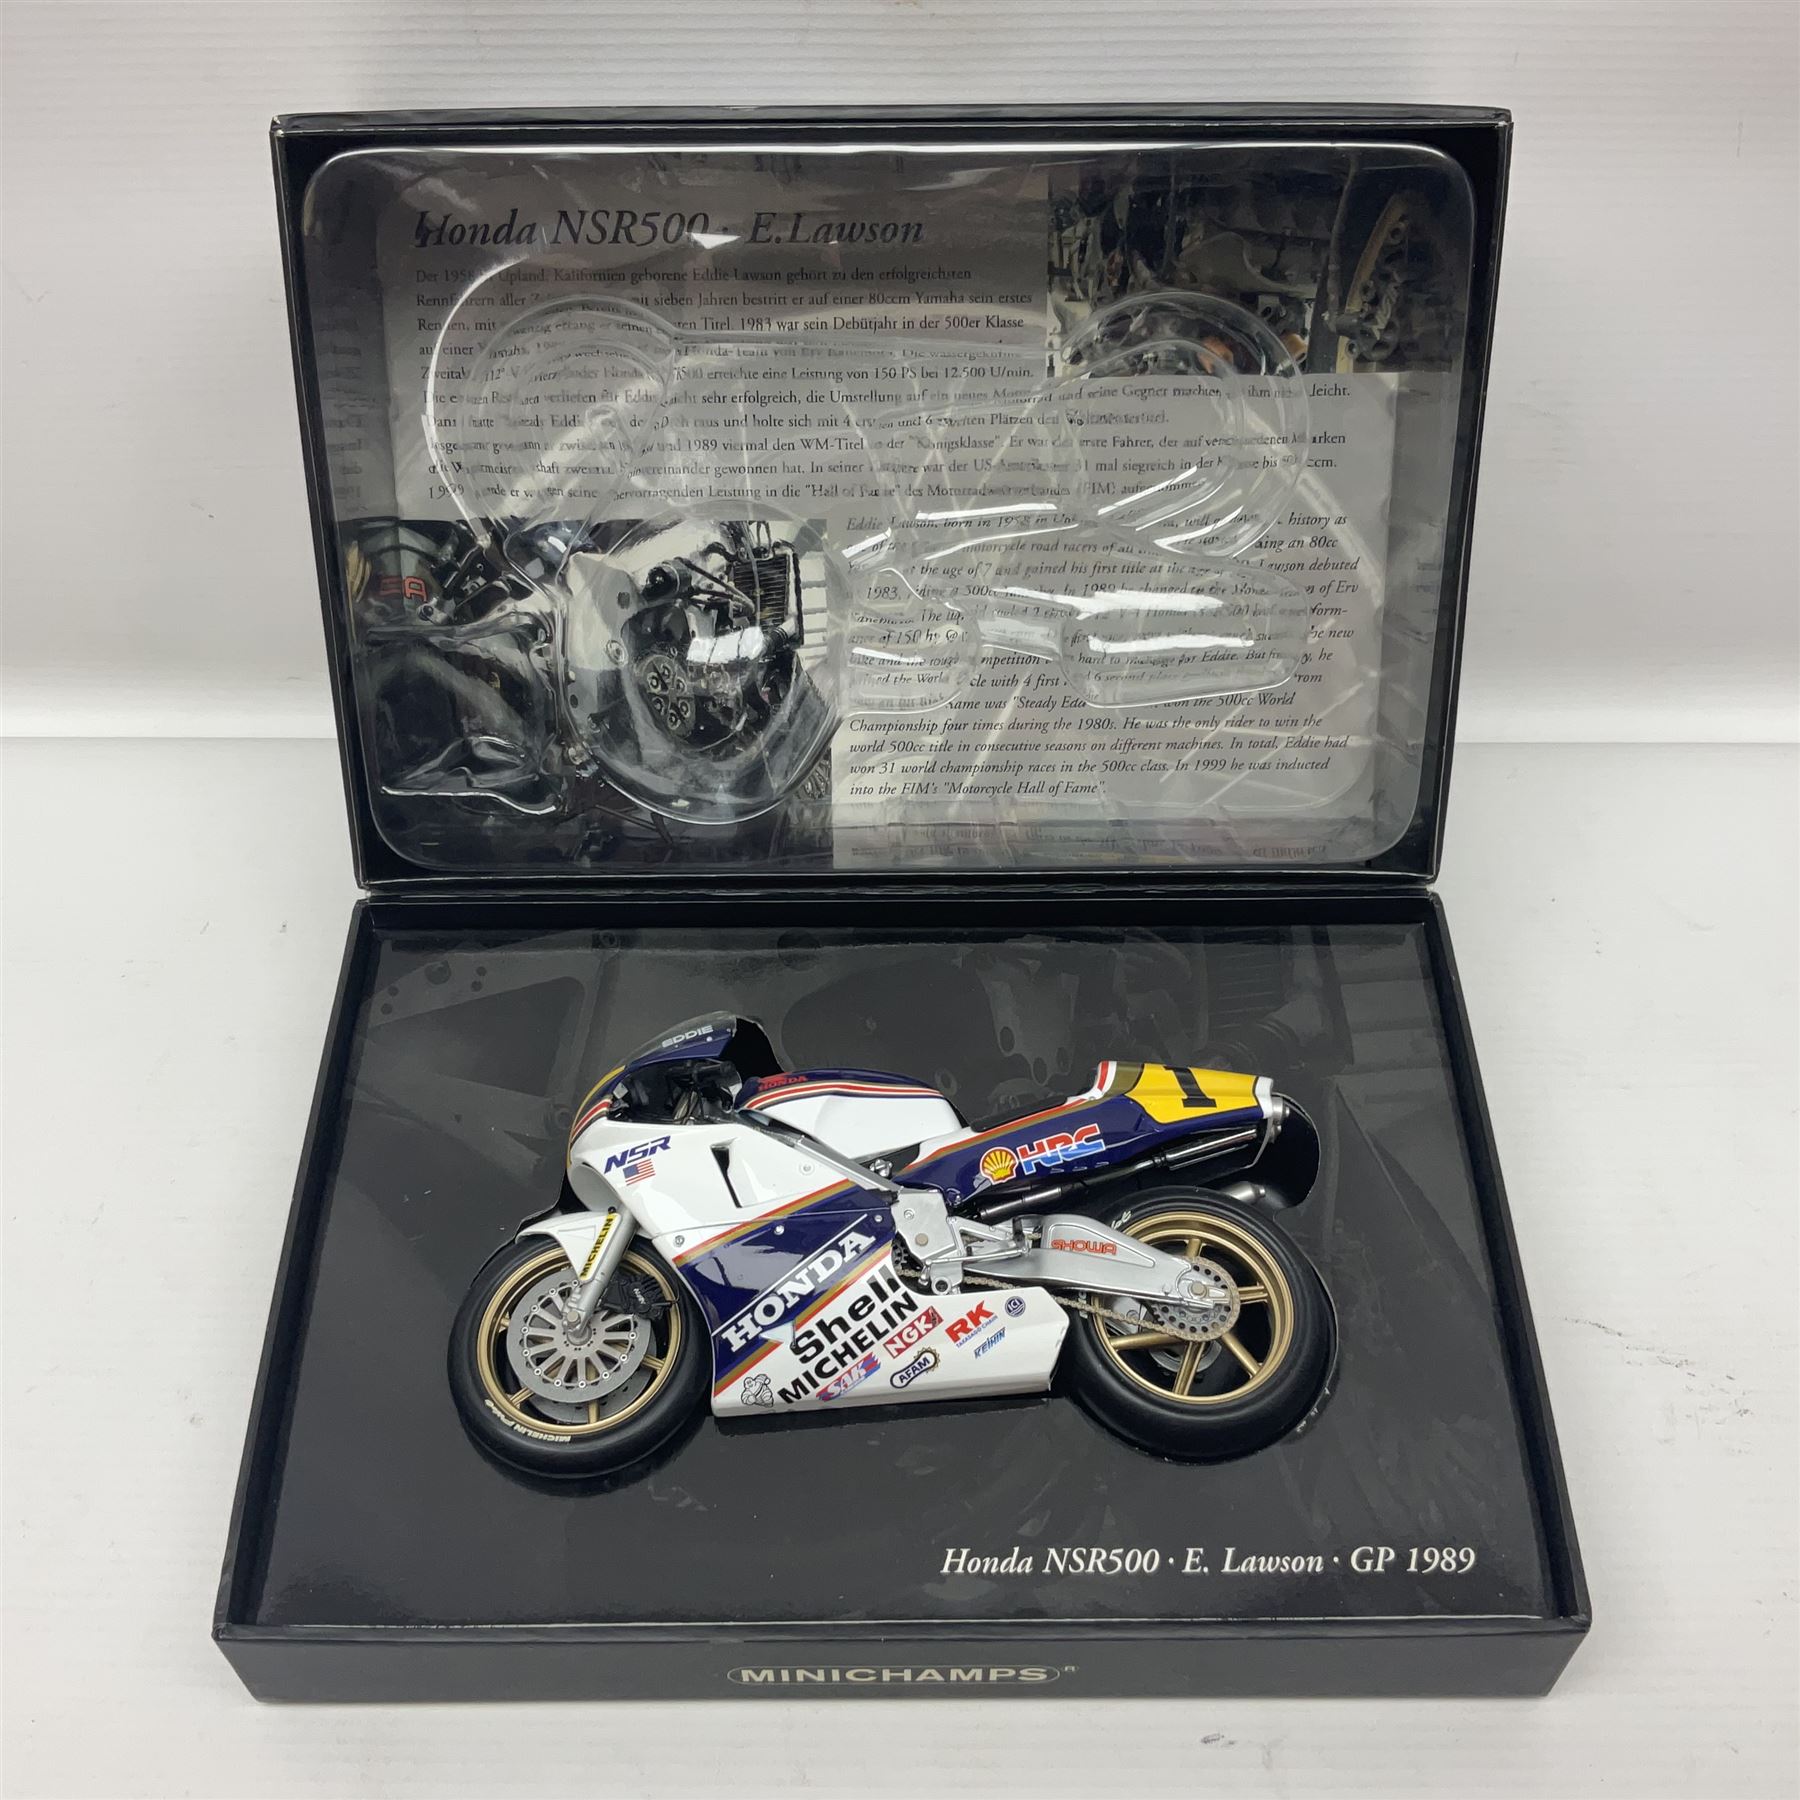 Minichamps Classic Bike Series 1:12 scale die-cast model - Honda NSR500 Eddie Lawson GP1989; boxed - Image 2 of 10